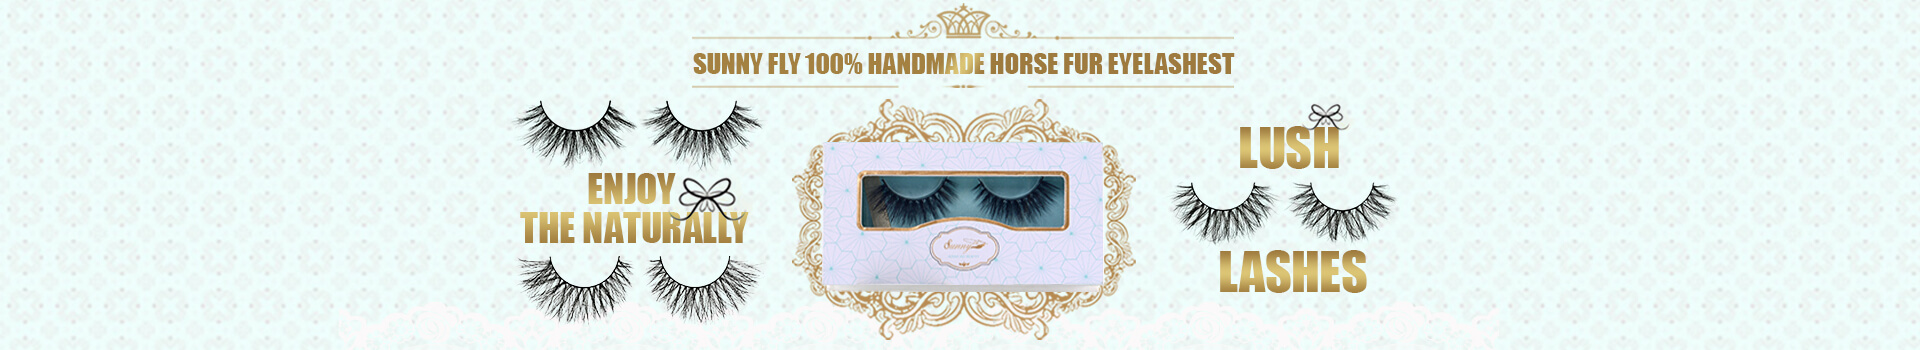 Real Horse Fur Eyesashes HF08